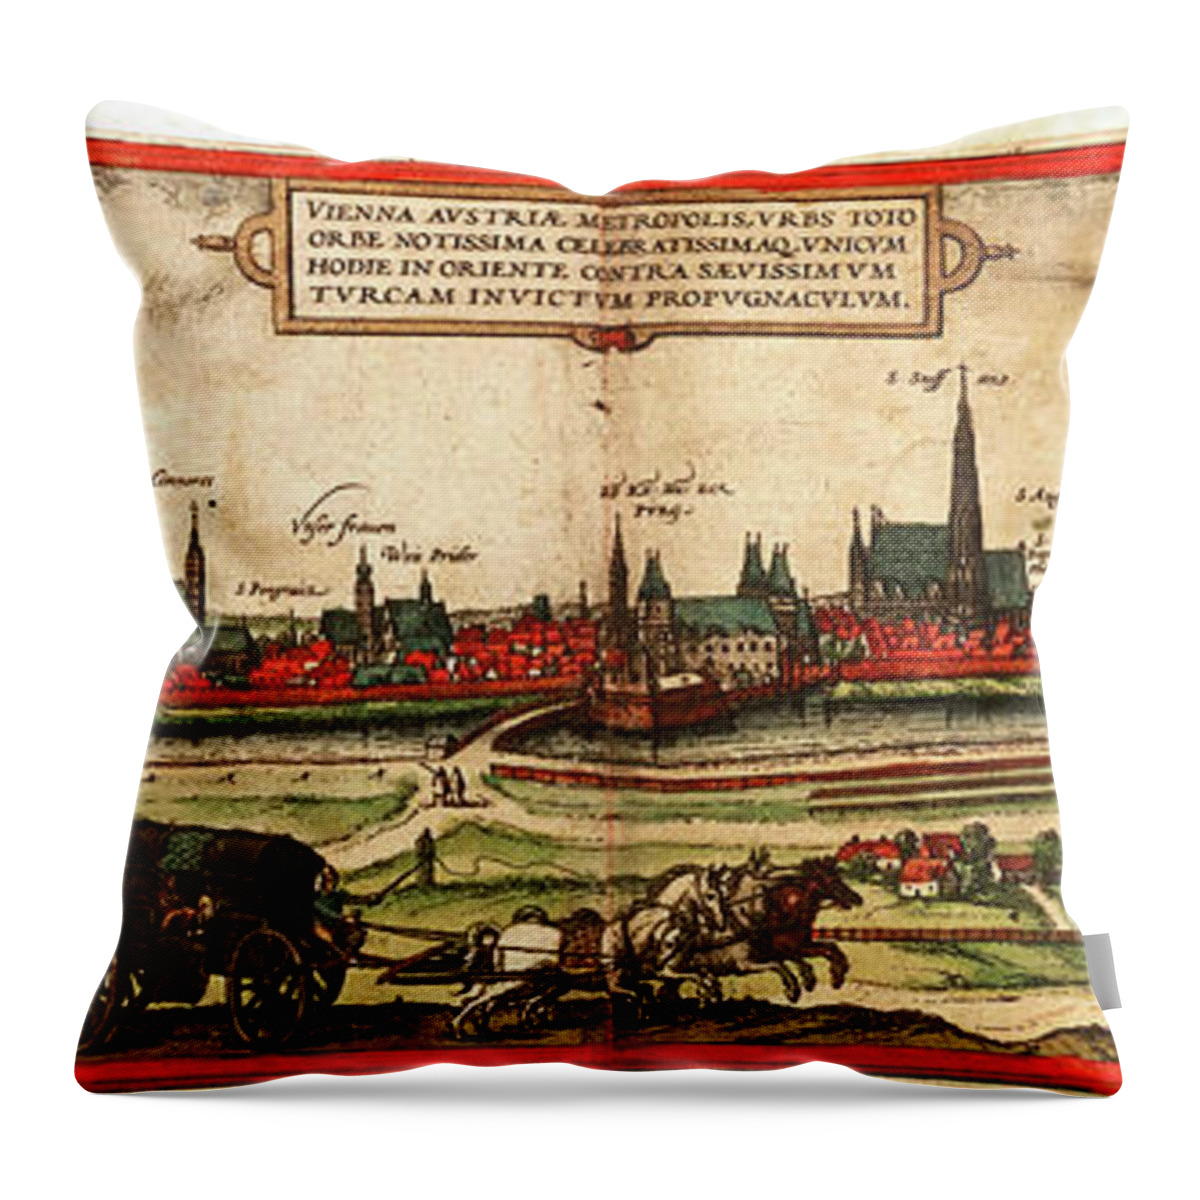 City Throw Pillow featuring the drawing Vienna Austria Wien by Braun Hogenberg